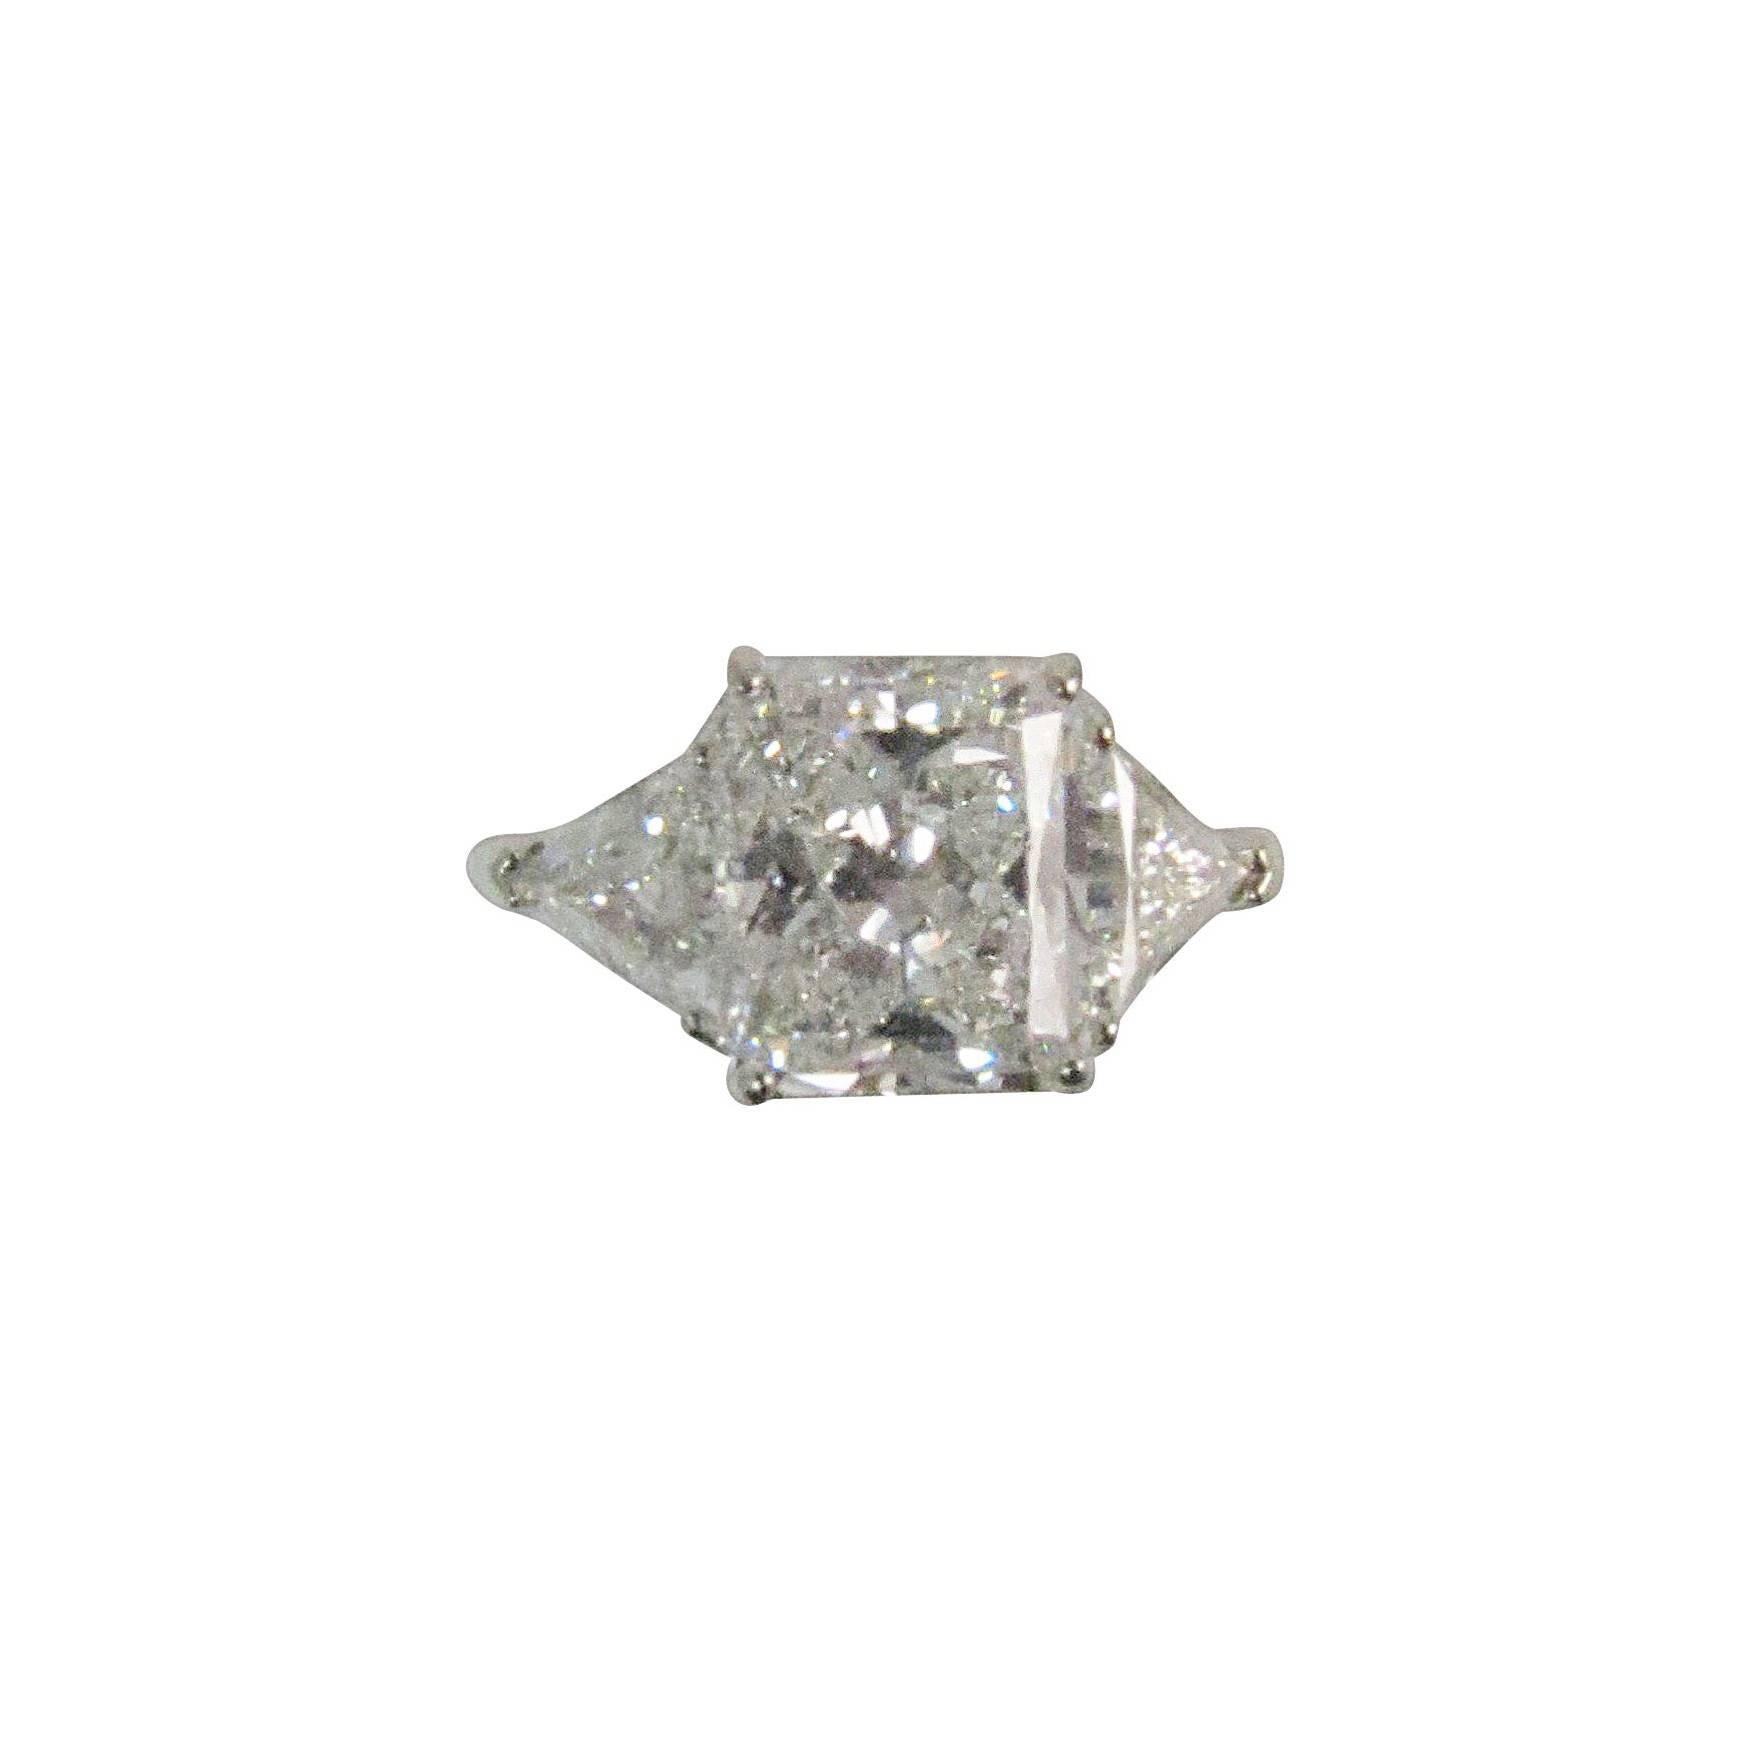 GIA Cert Radiant Cut Diamond, F Color, SI1 Clarity & Trilliants in Platinum Ring